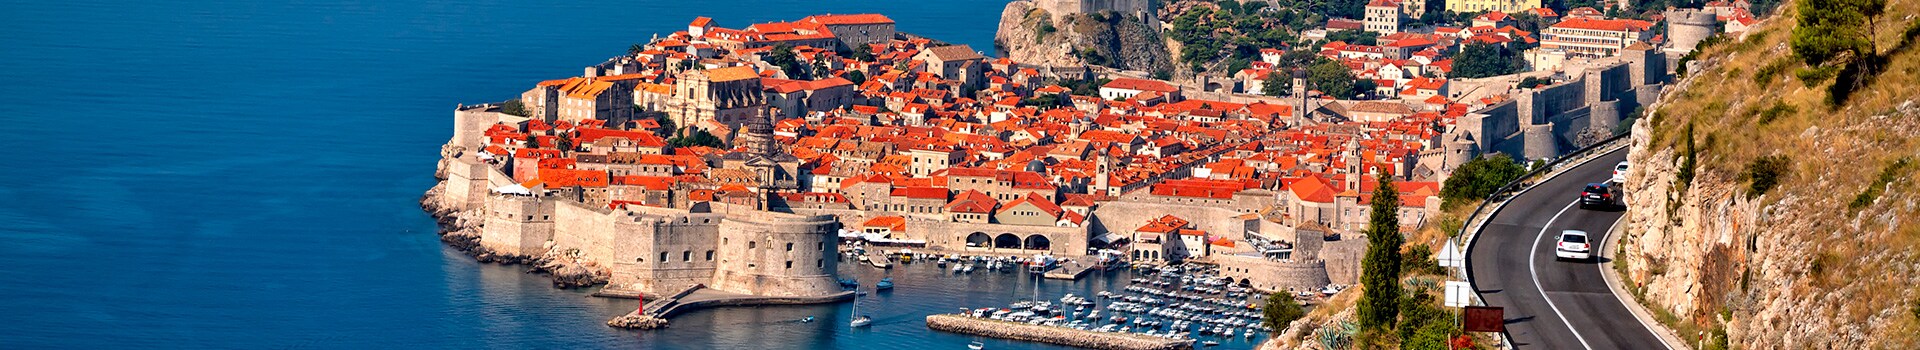 Costa del Sol - Dubrovnik